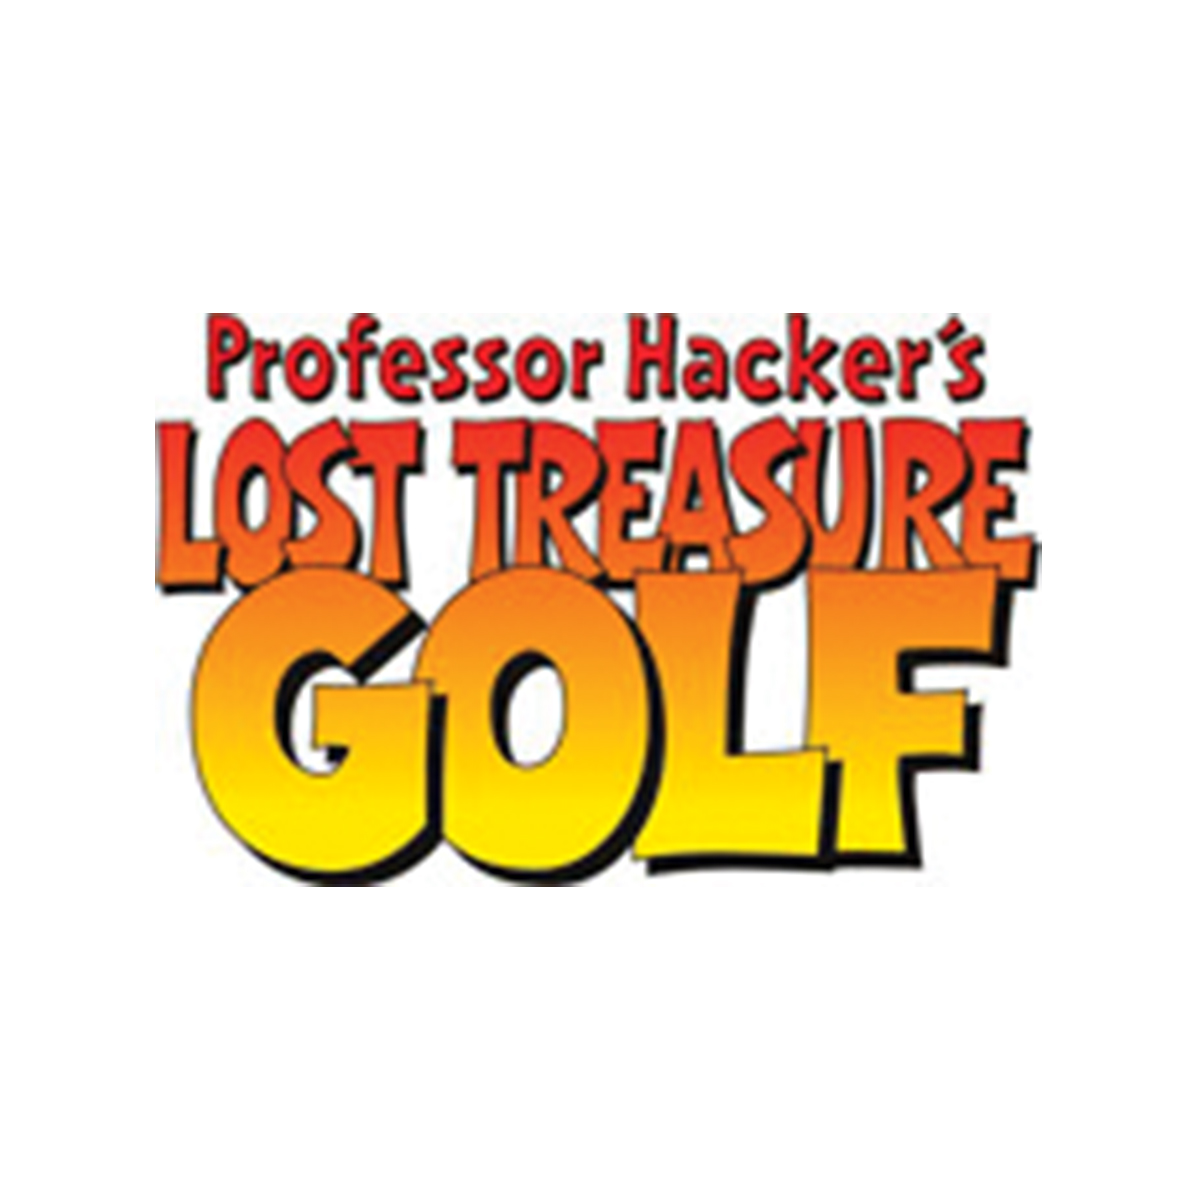 Lost Treasure Golf 2019 SMCB Logo.jpg